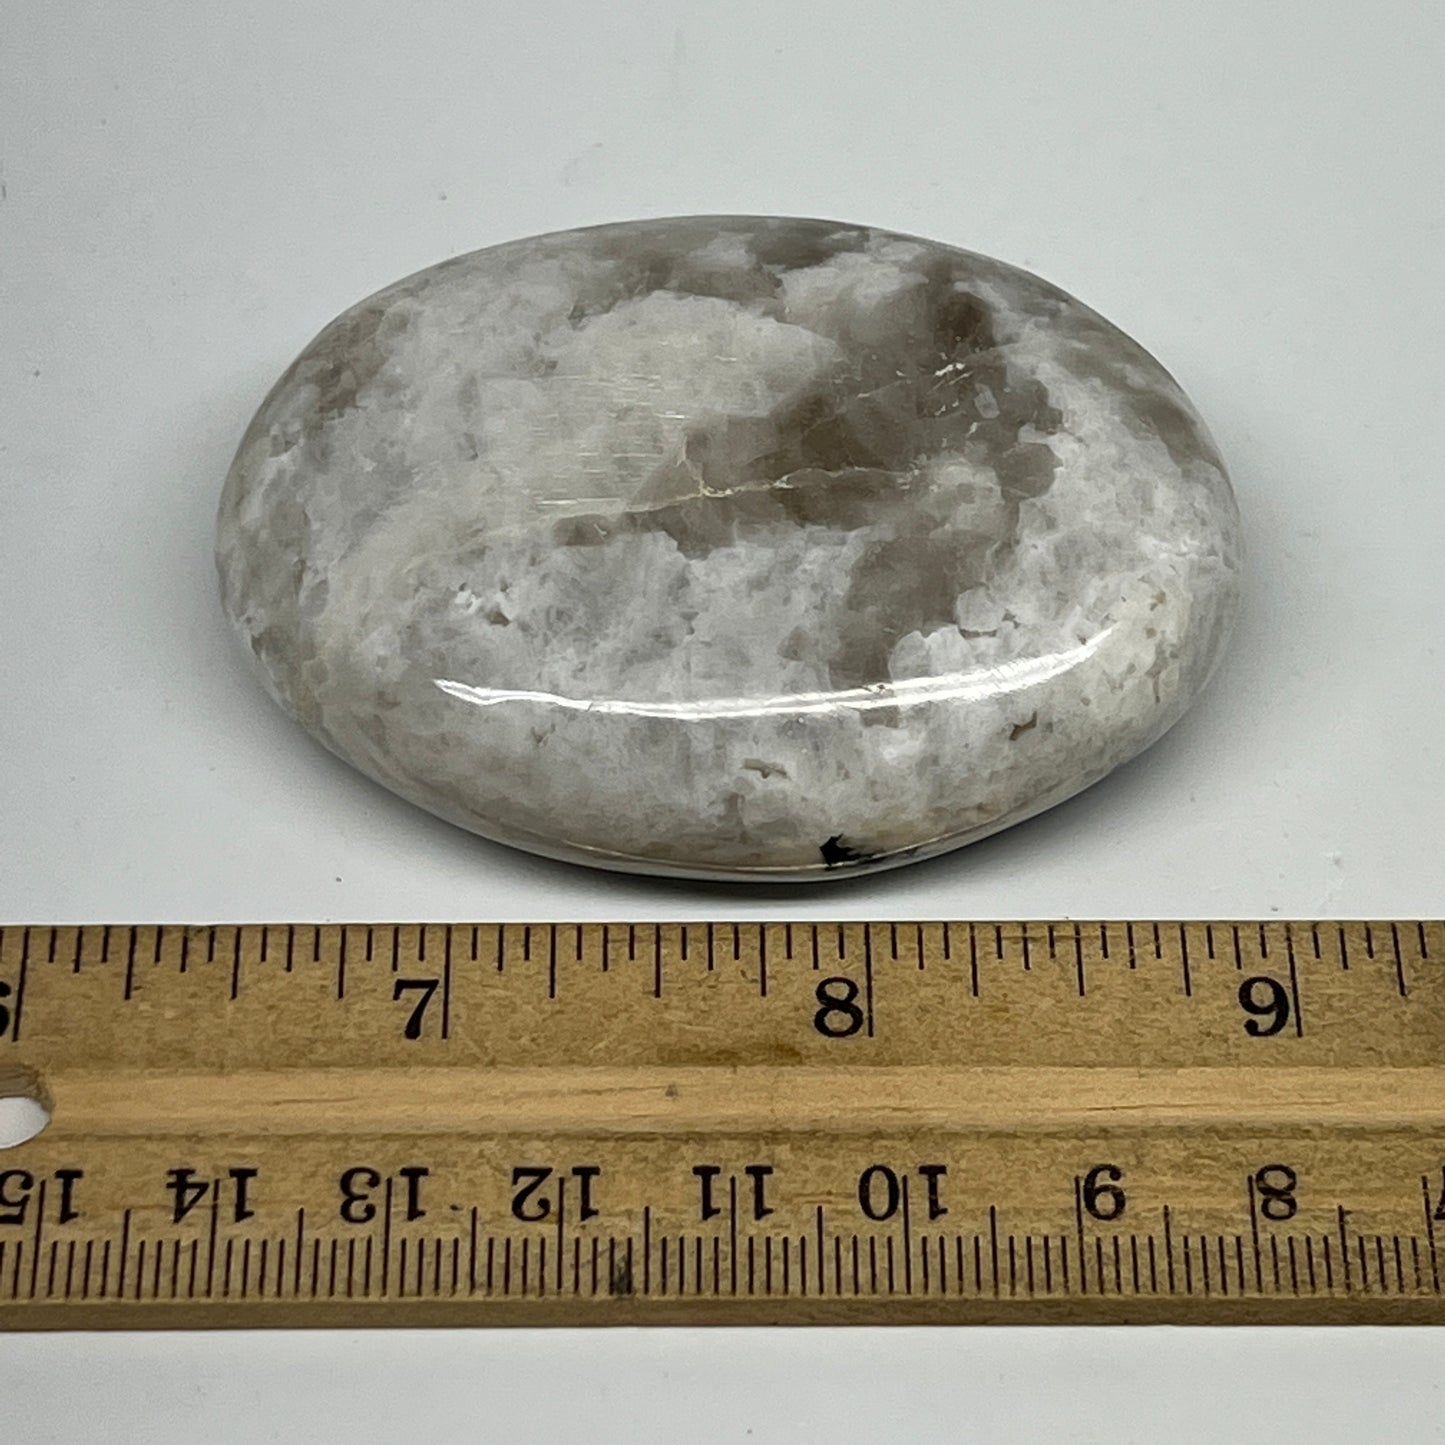 104g,2.5"x1.9"x0.8", Rainbow Moonstone Palm-Stone Polished from India, B21251